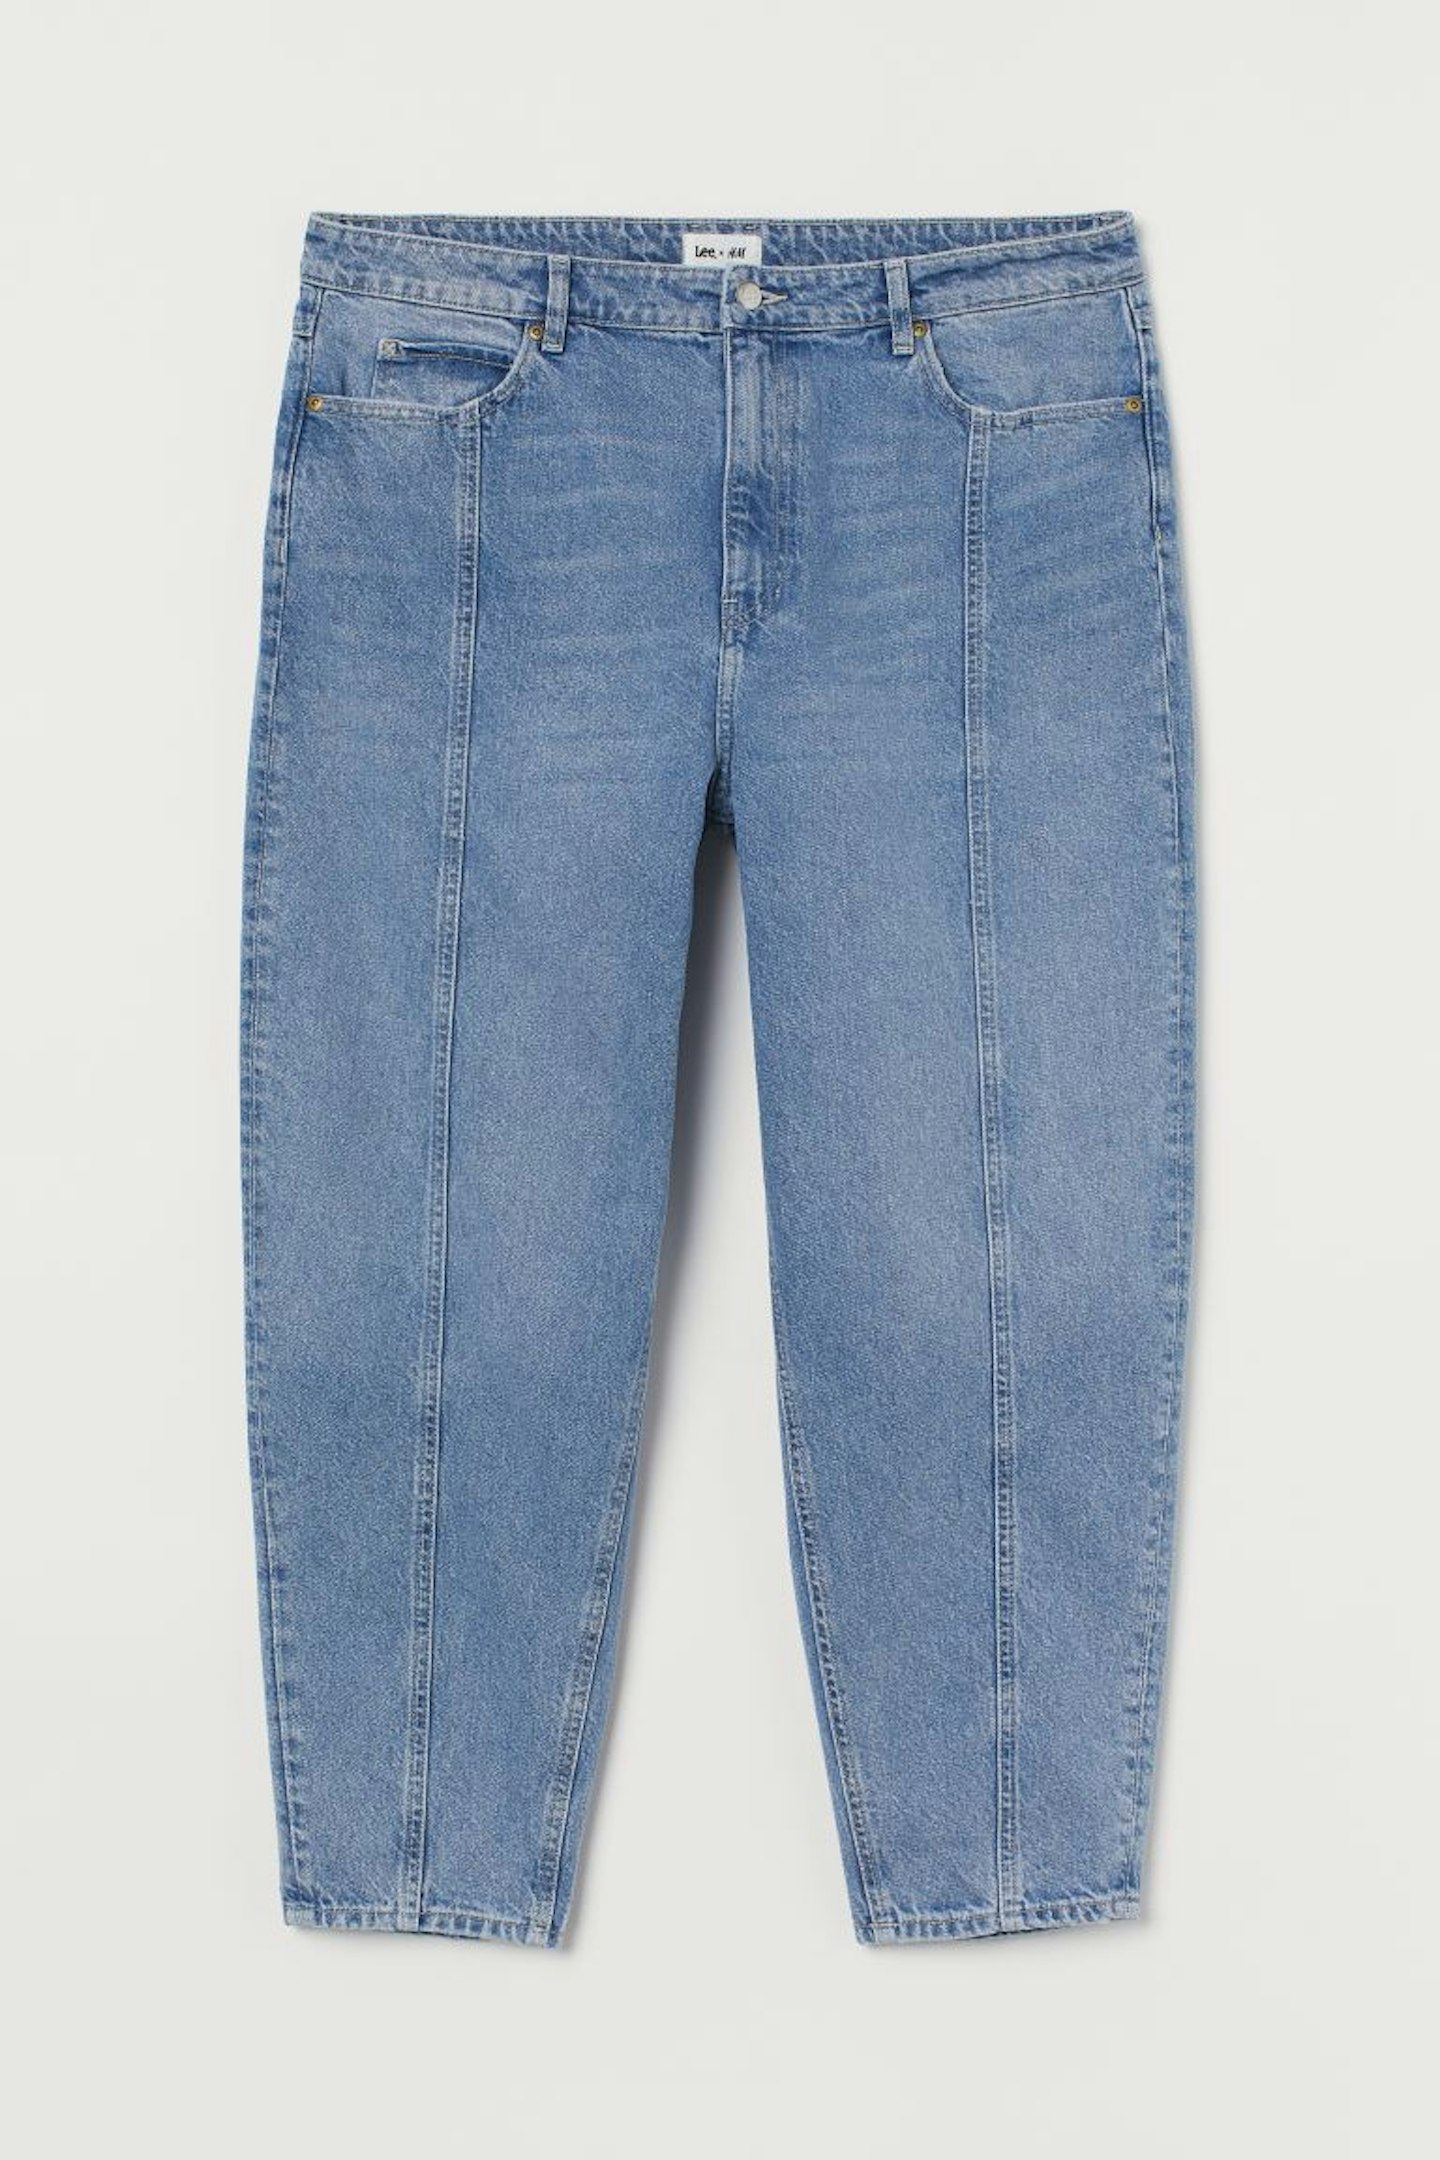 Lee X H&M+, Loose Fit Mom Jeans, £34.99